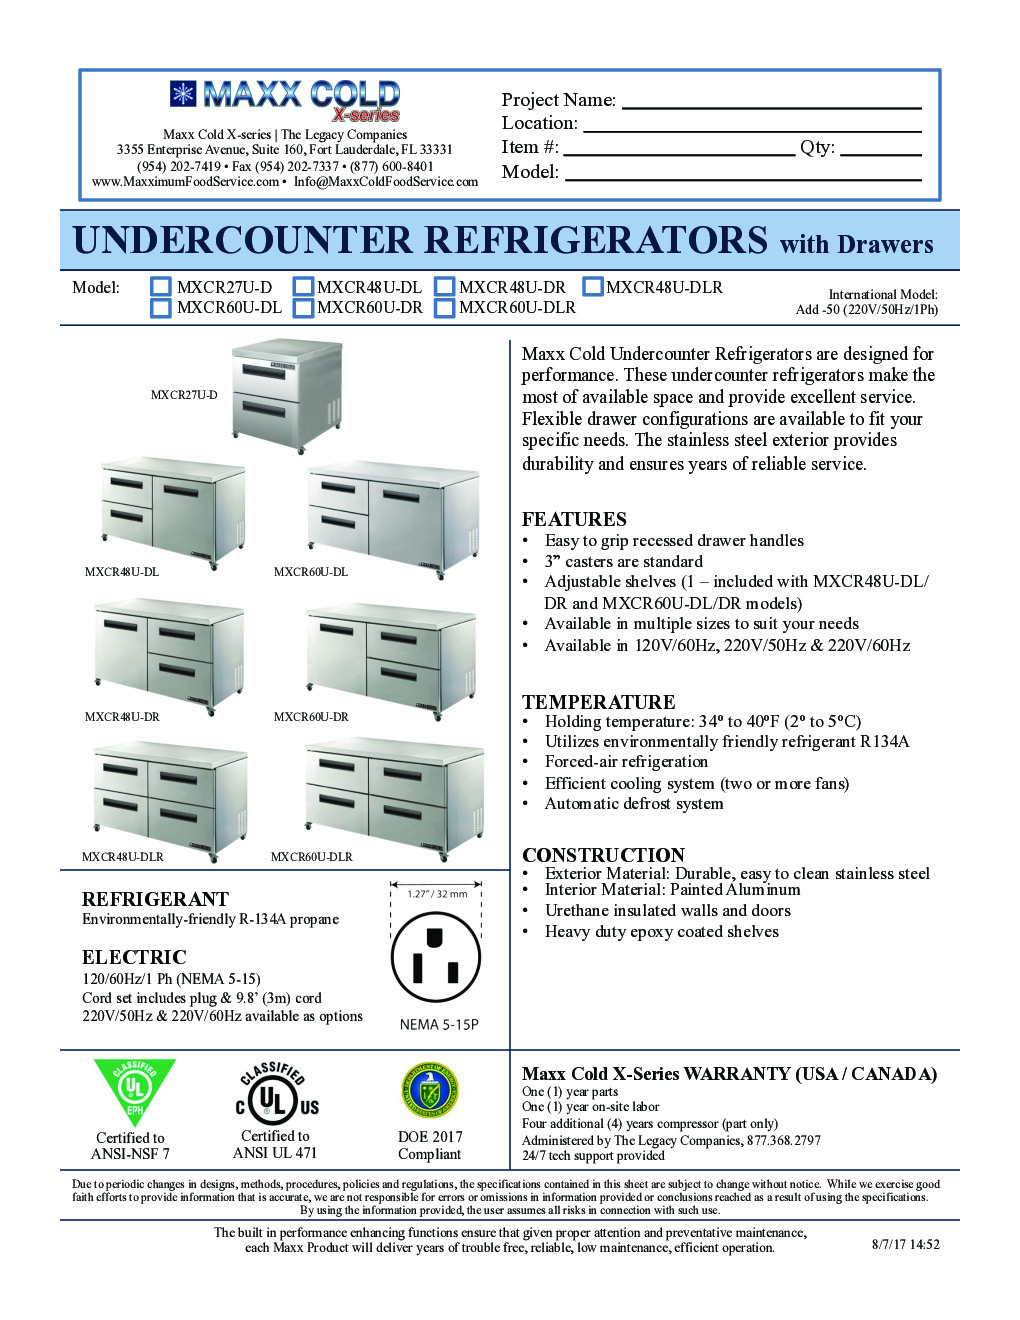 Maxximum MXCR48U-DLR Reach-In Undercounter Refrigerator